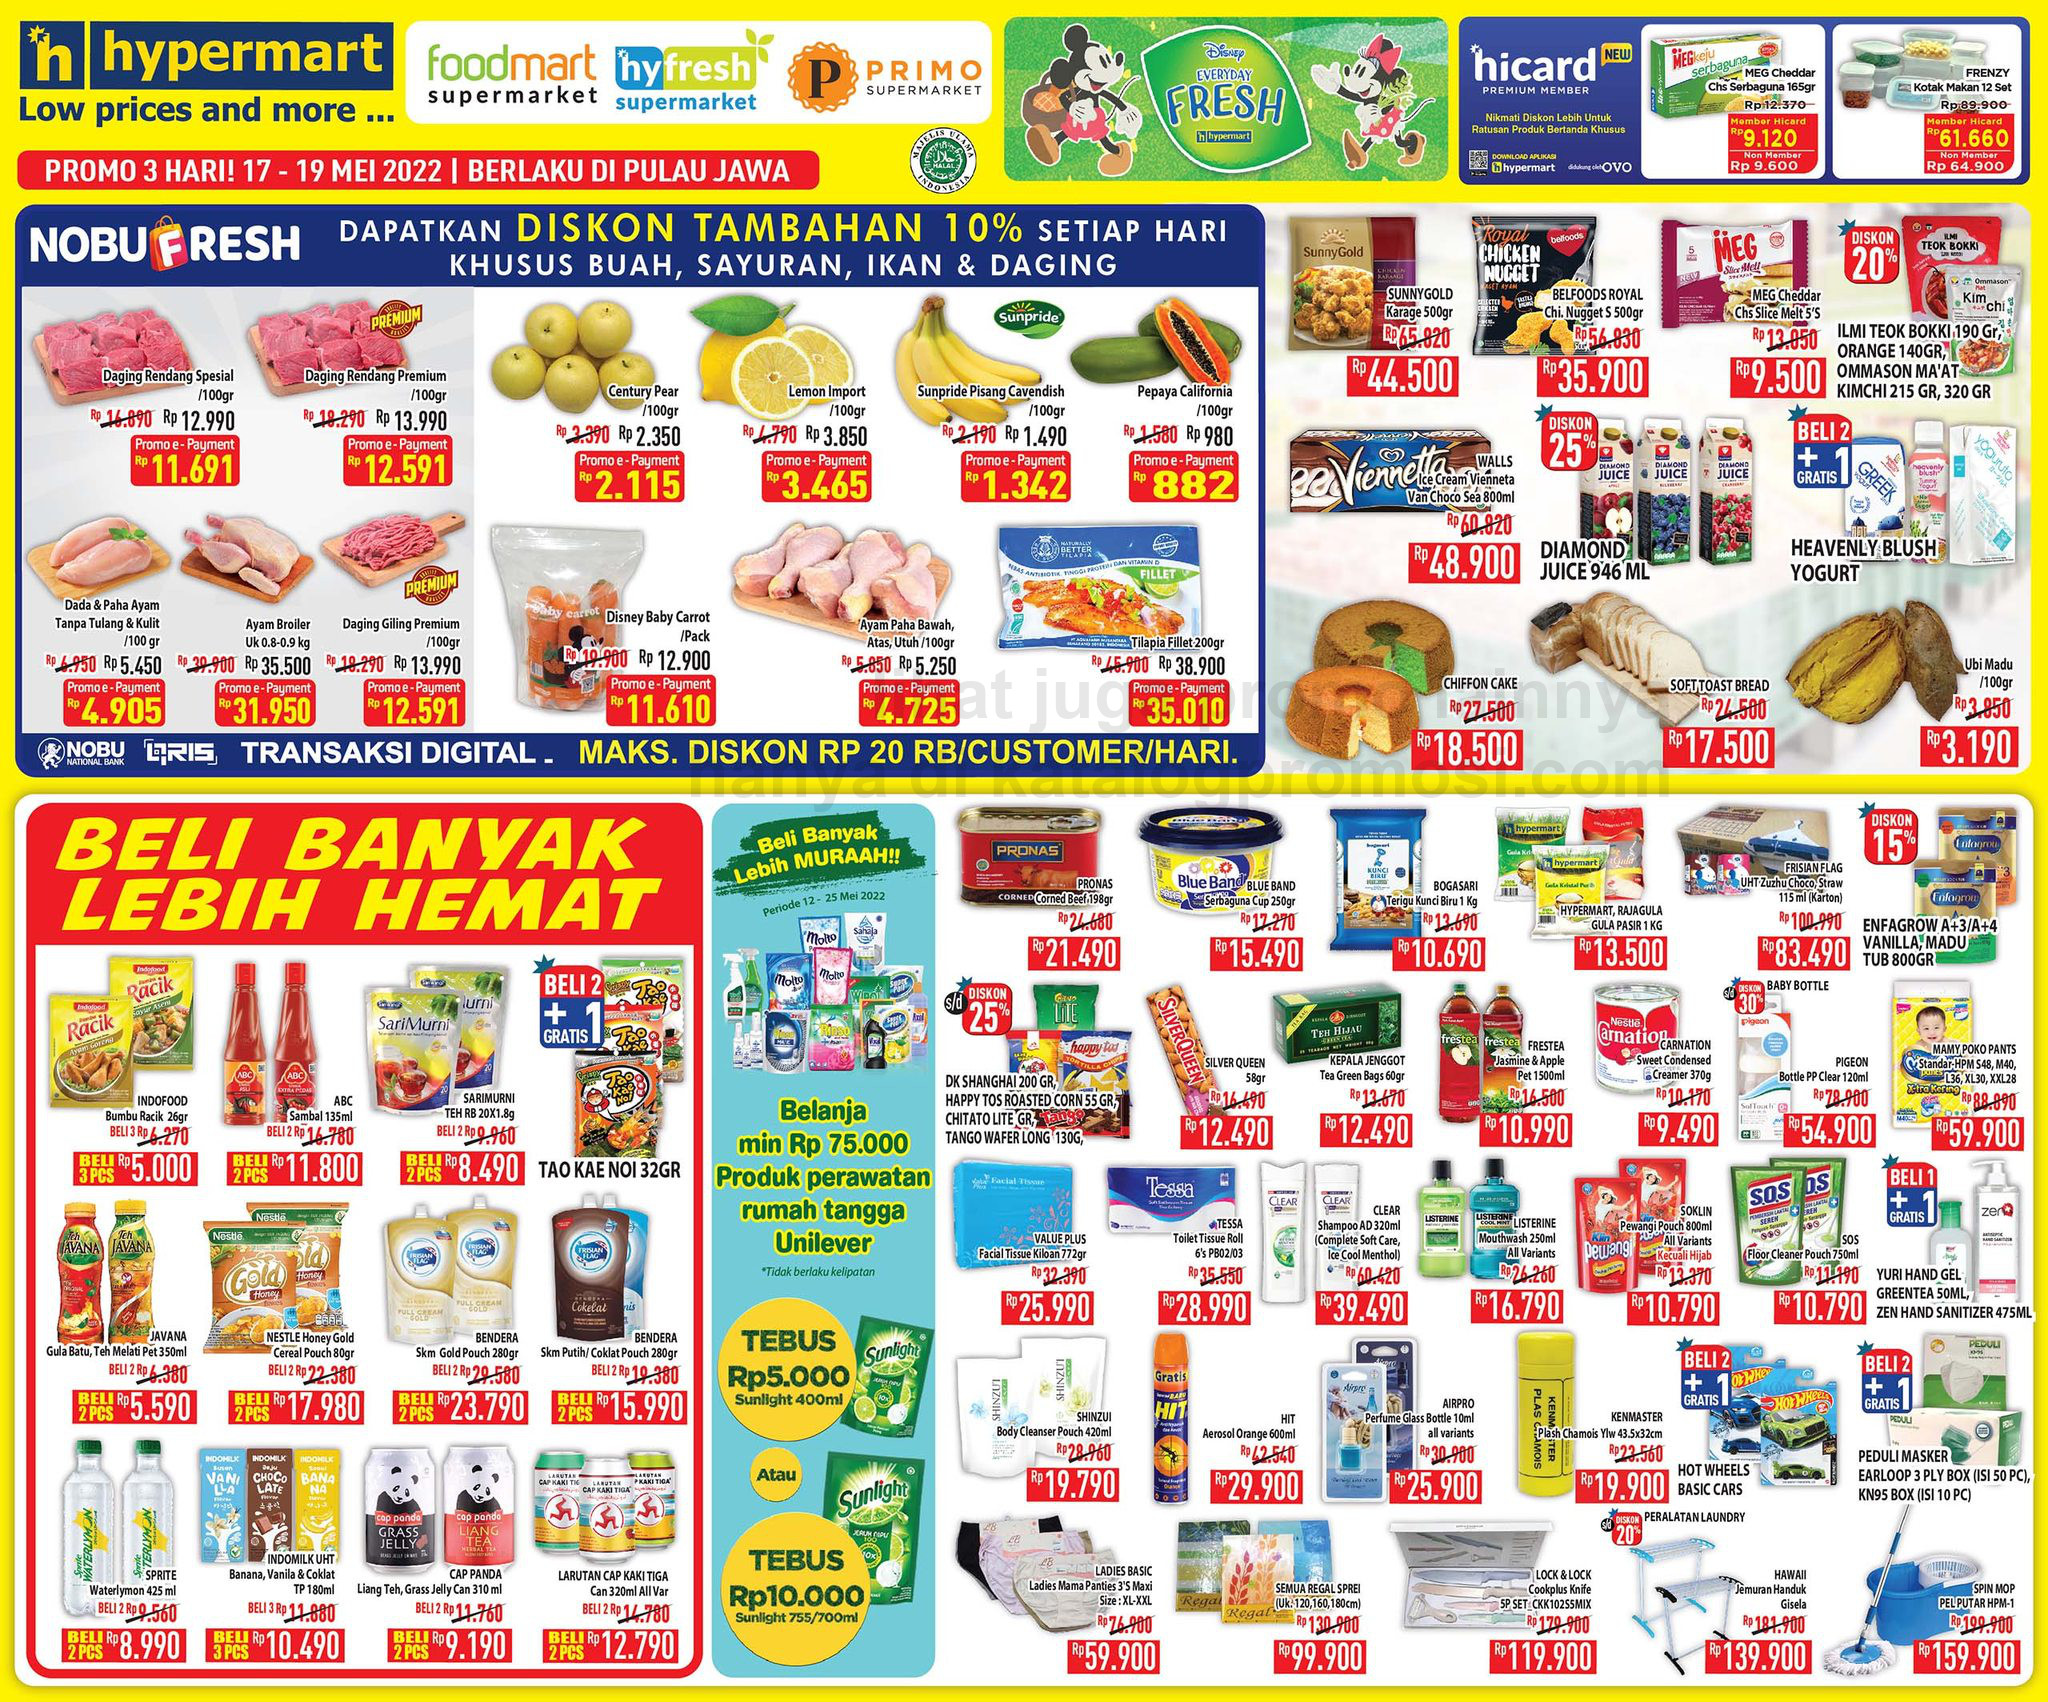 Katalog Hypermart Promo Weekday periode 17-19 MEI 2022